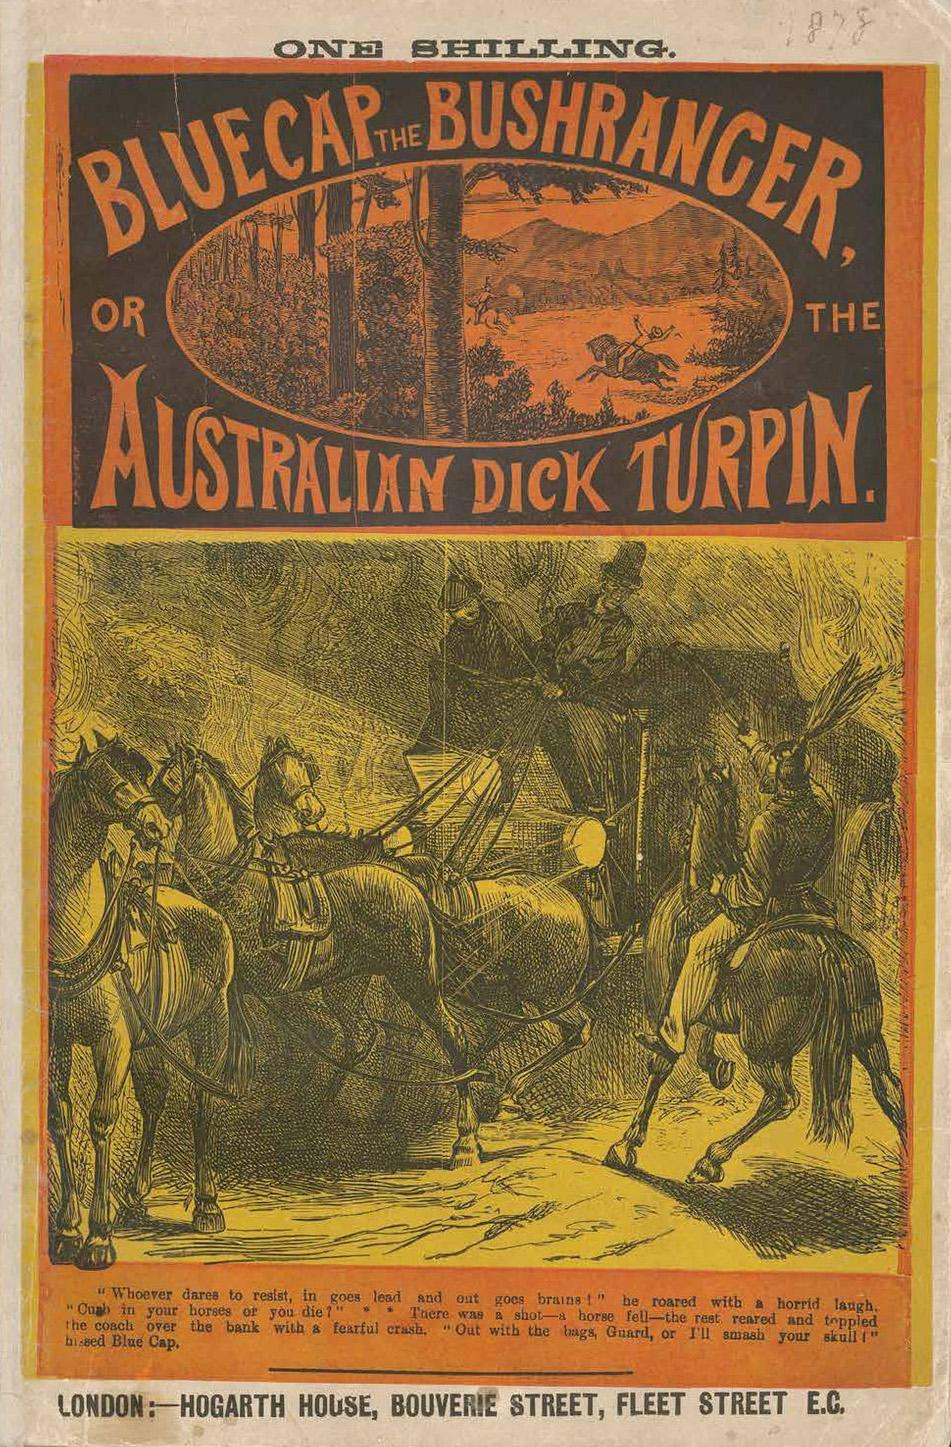 Penny dreadful Australian dick turpin front cover [Au/19 BOR b]